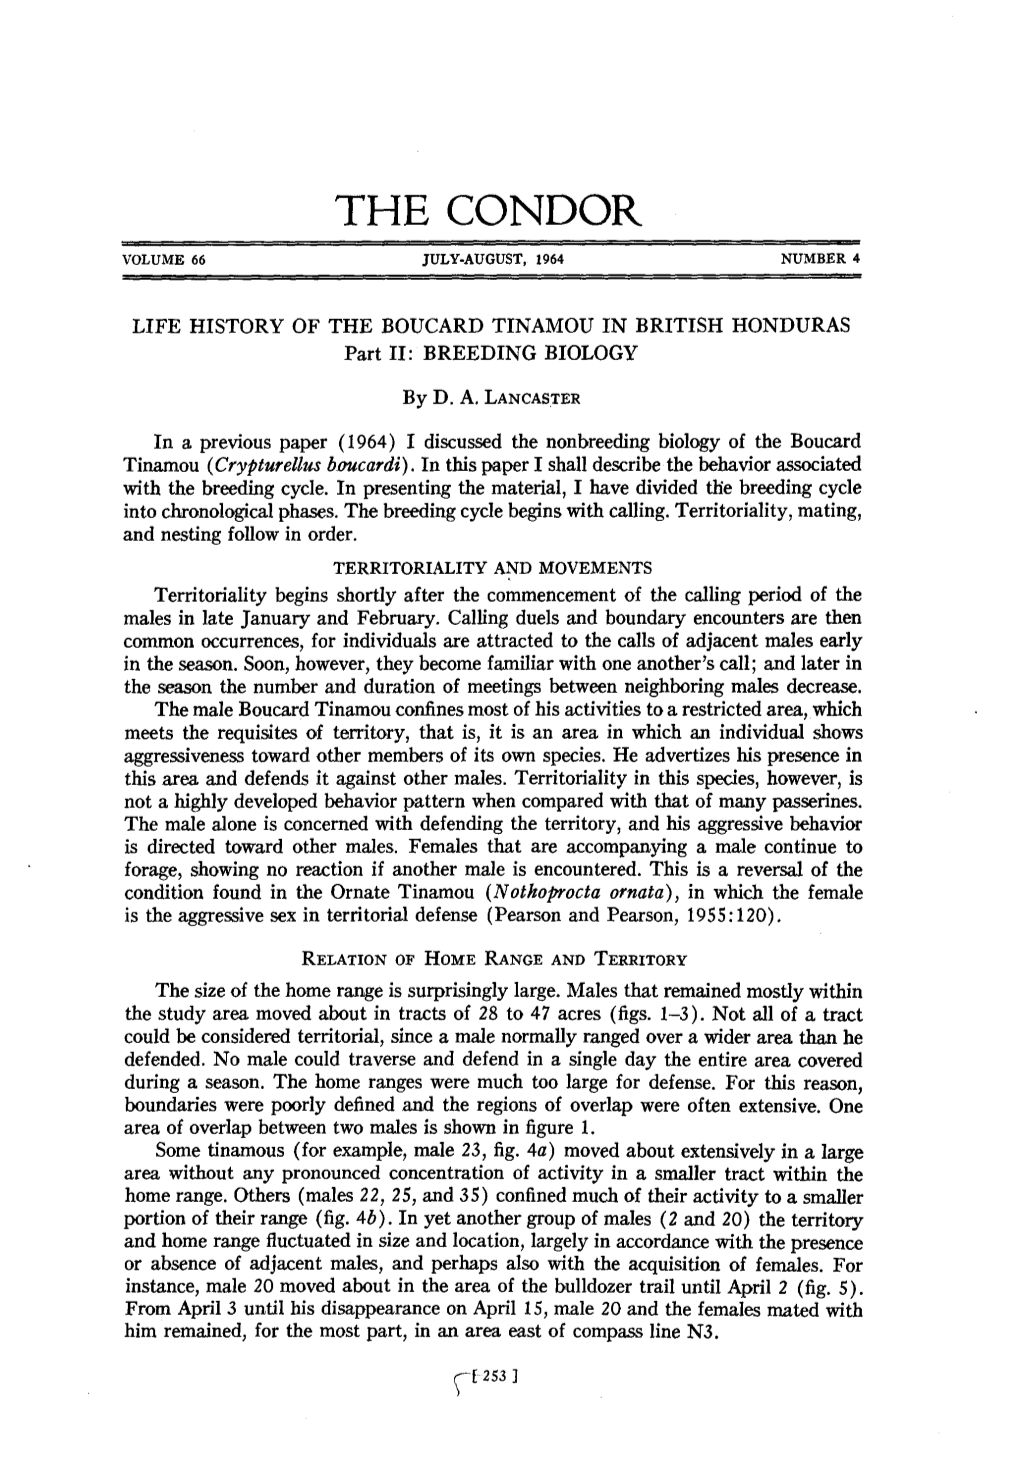 LIFE HISTORY of the BOUCARD TINAMOU in BRITISH HONDURAS Part II: BREEDING BIOLOGY